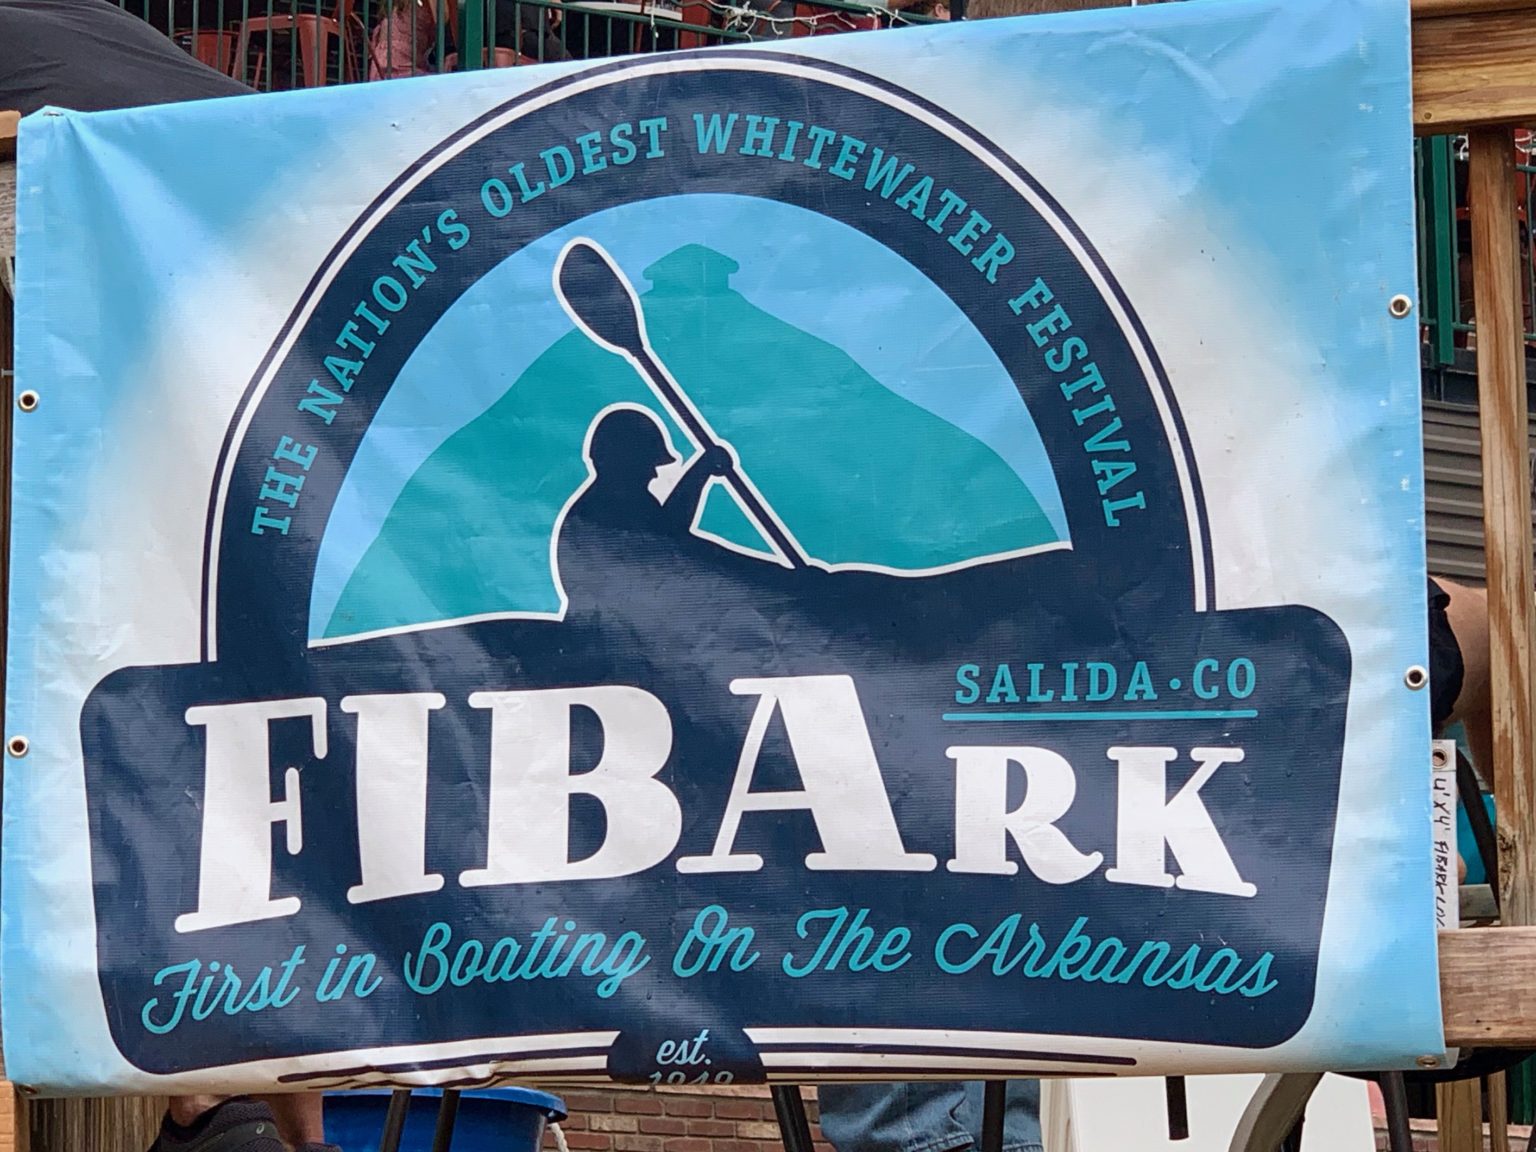 FIBArk seeking timberline